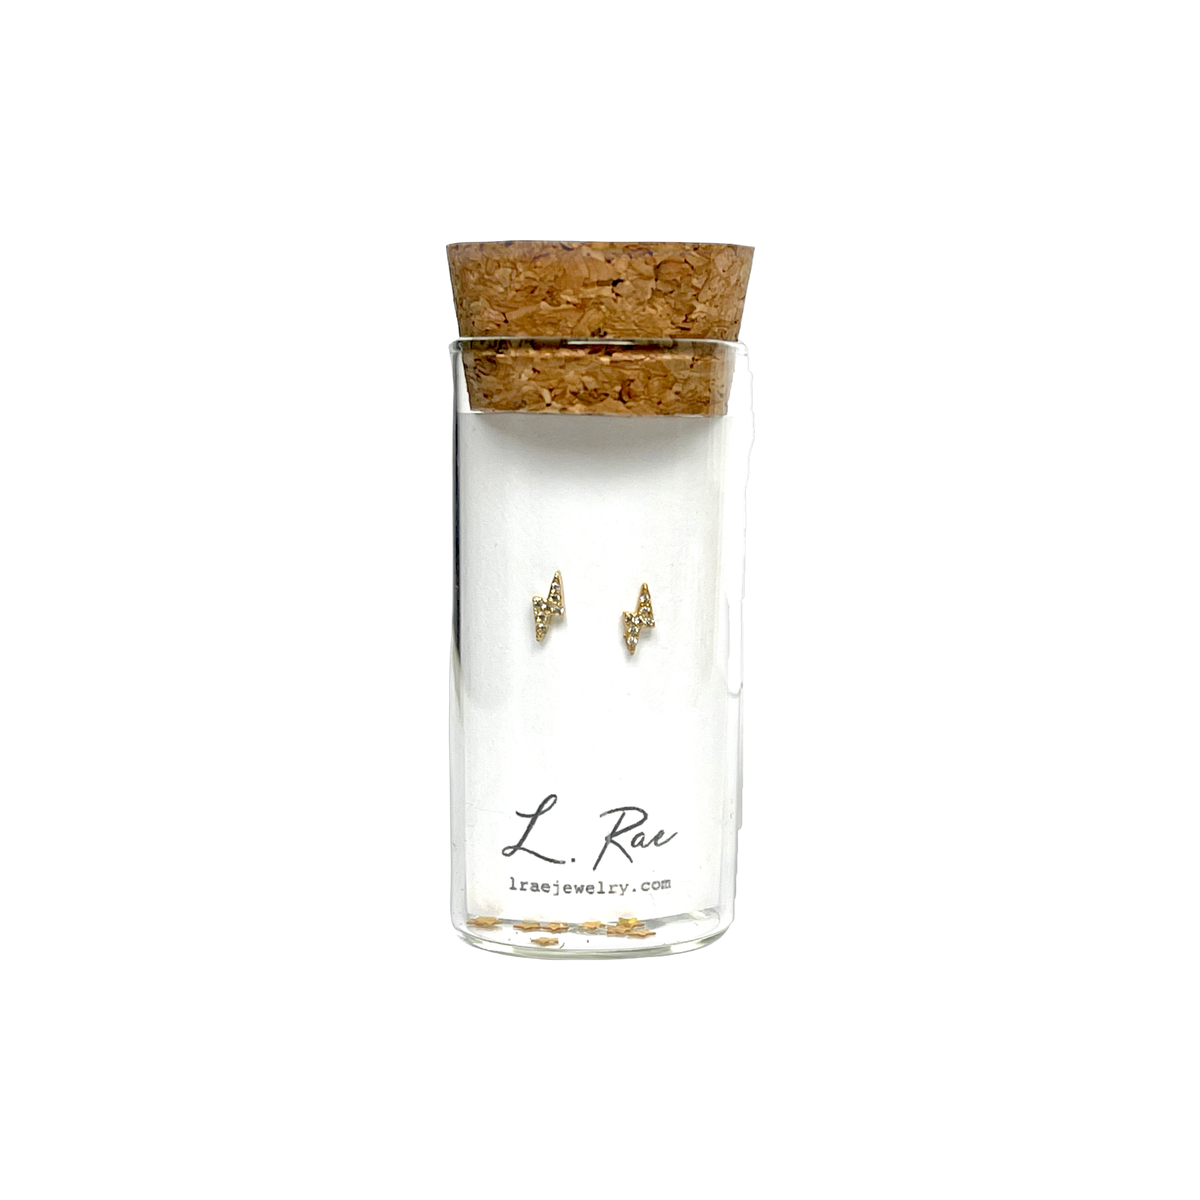 Bolt Lightning Stud Post Earrings in Glass Jar. Gold Pave